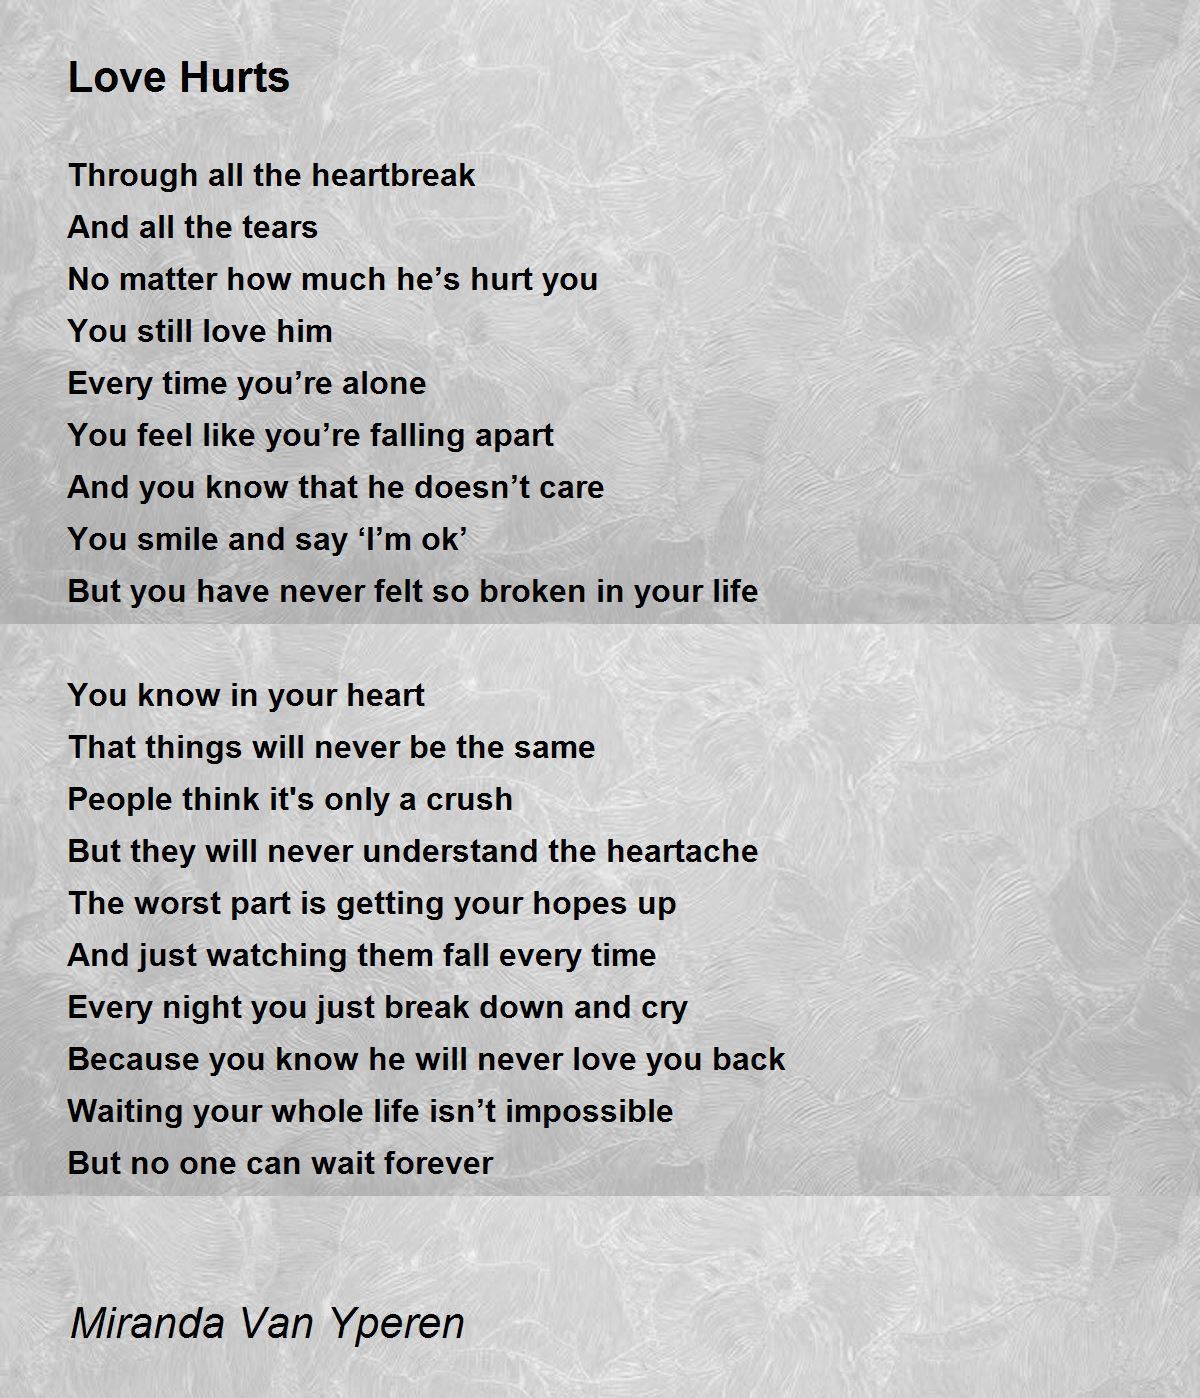 Love Hurts - Love Hurts Poem by Miranda Van Yperen